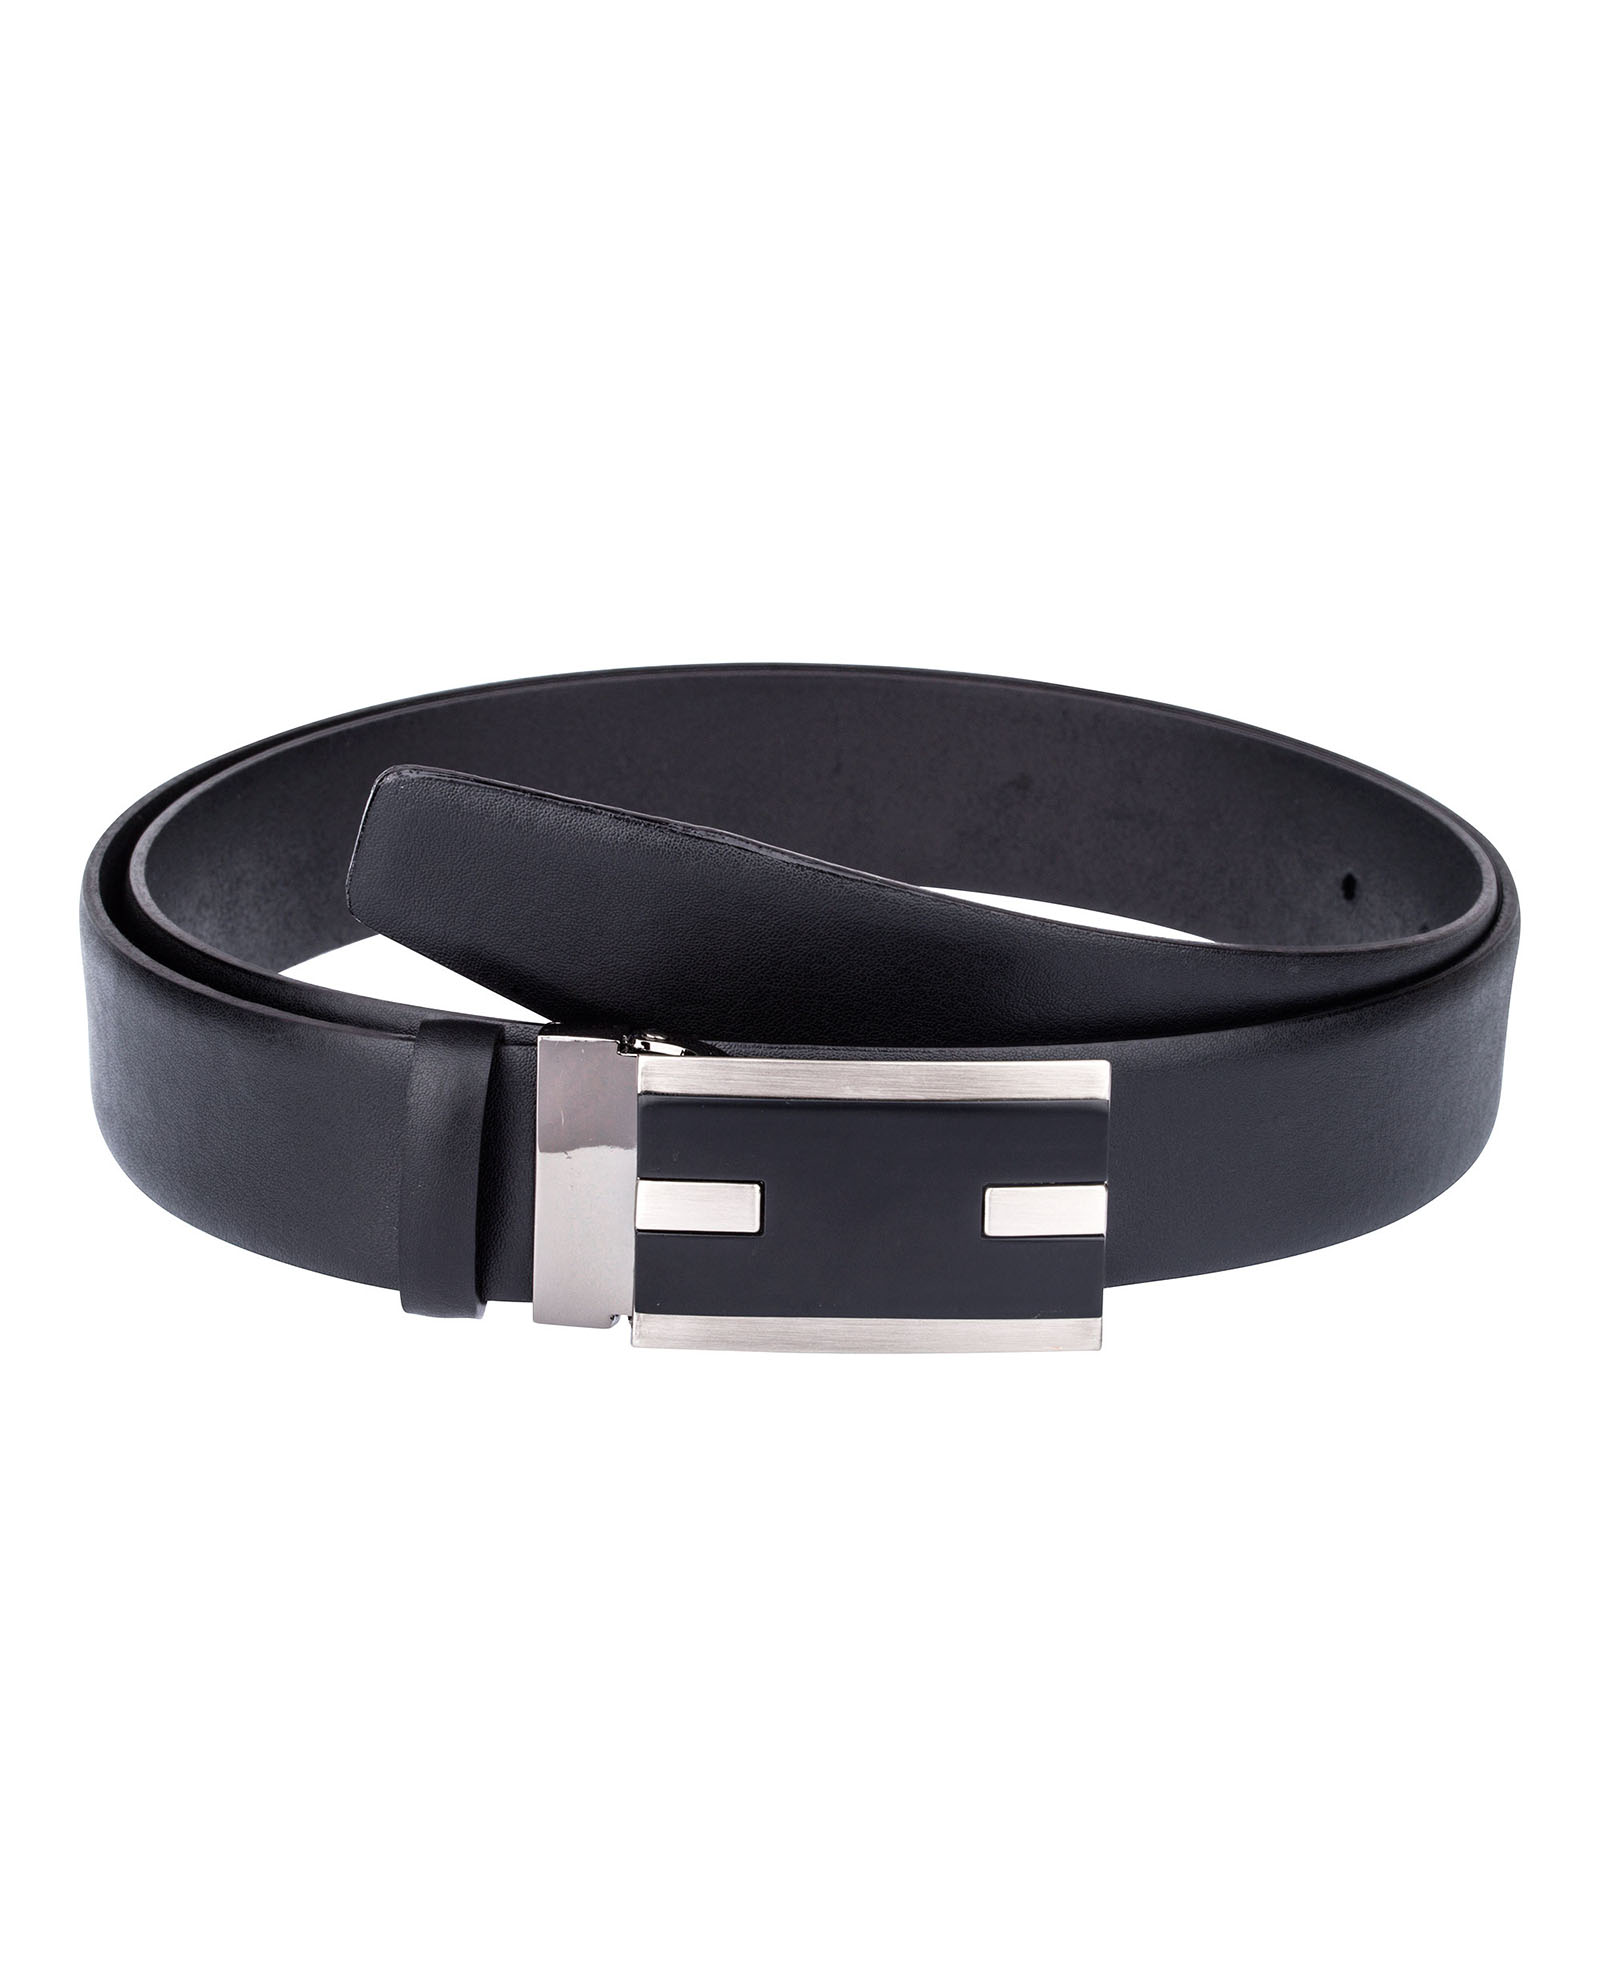 Buy Black Leather Belt for Men | LeatherBeltsOnline.com | Free Shipping